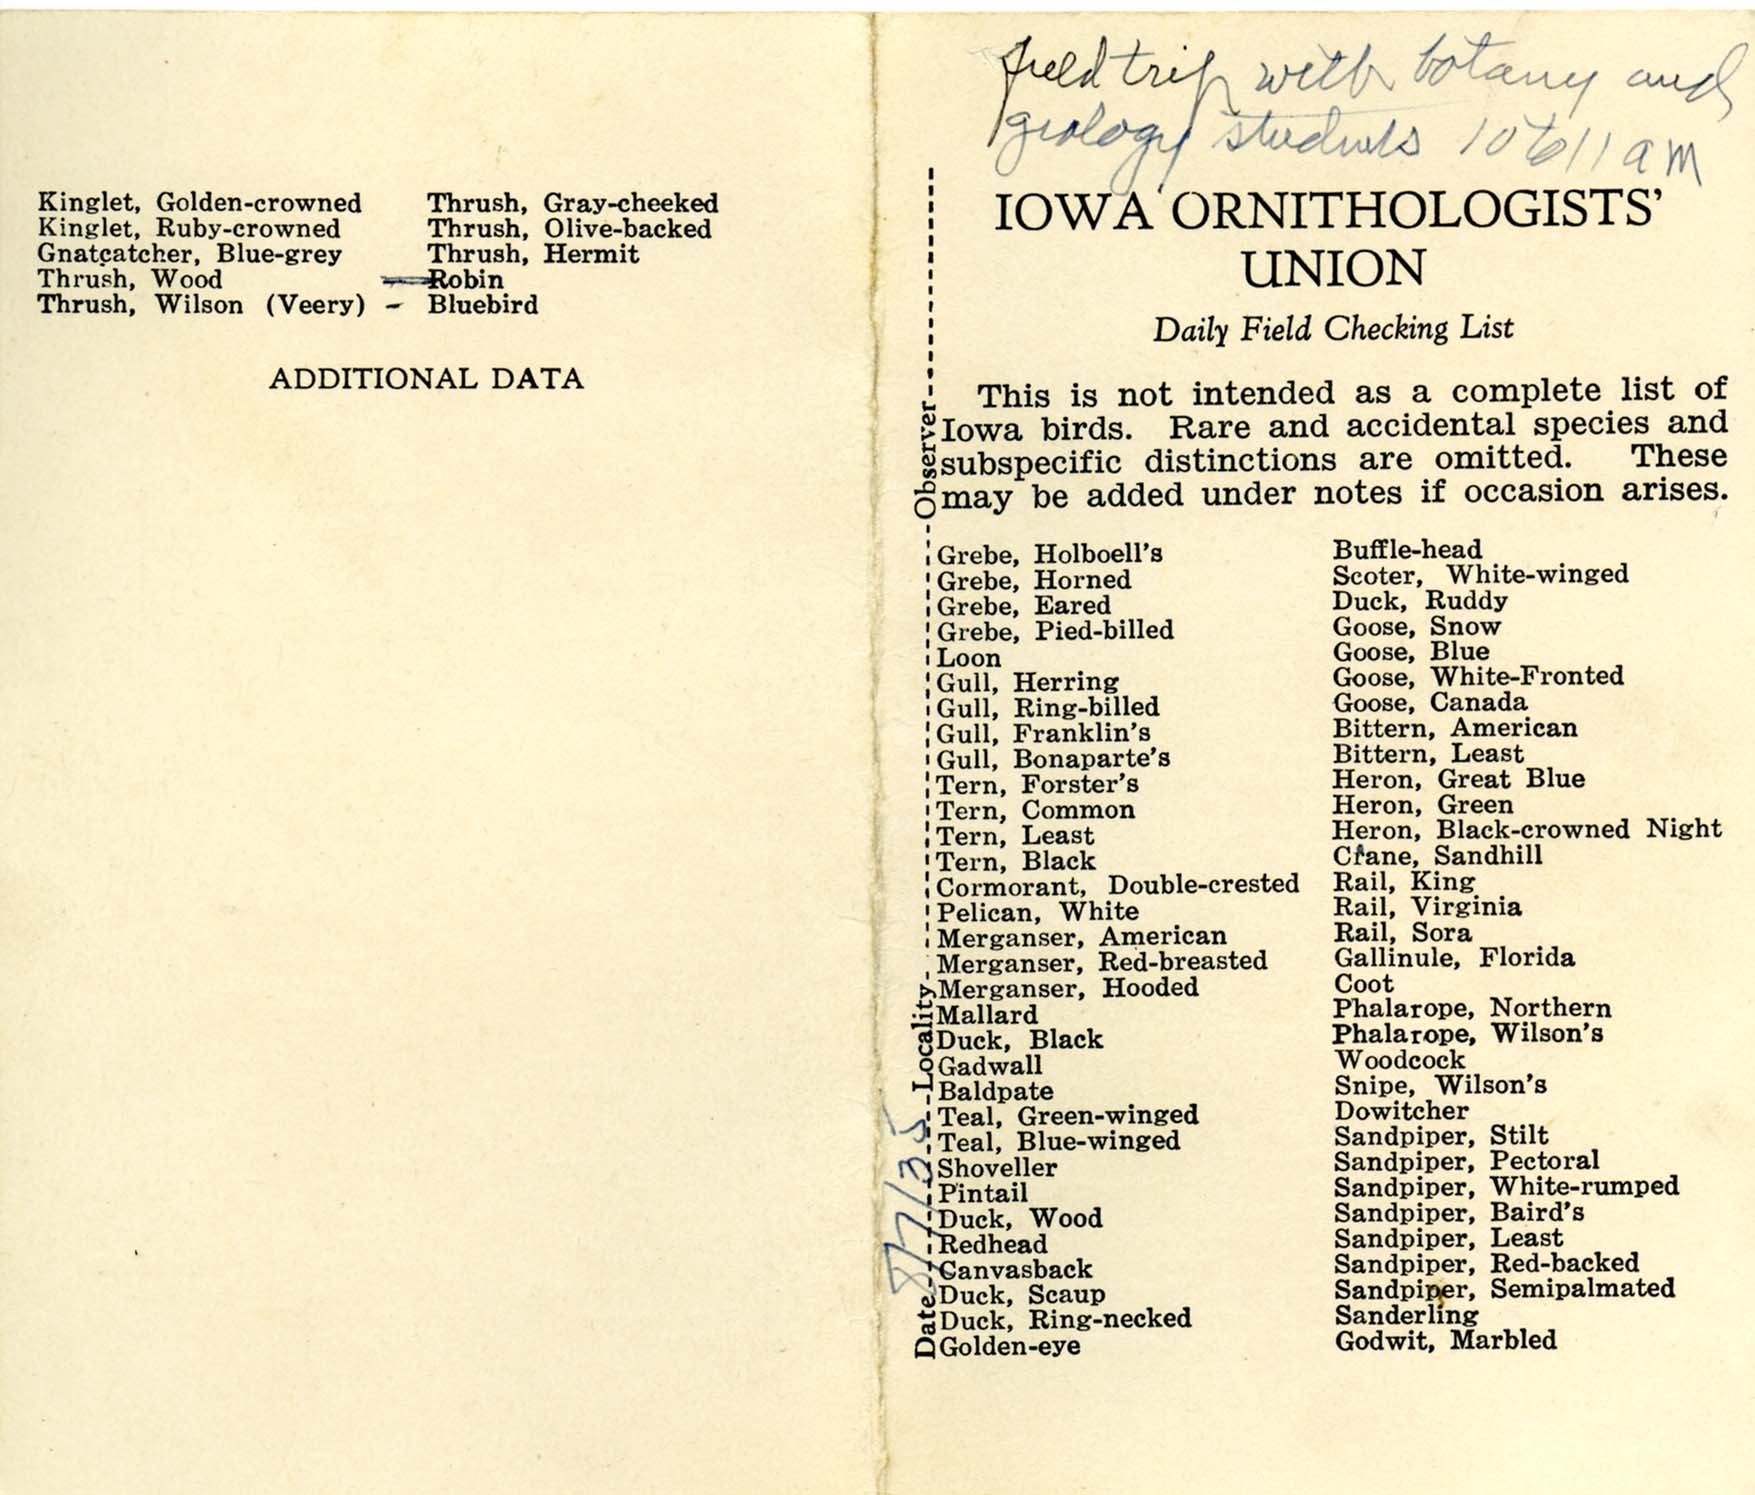 Daily field checking list, Walter Rosene, August 7, 1935